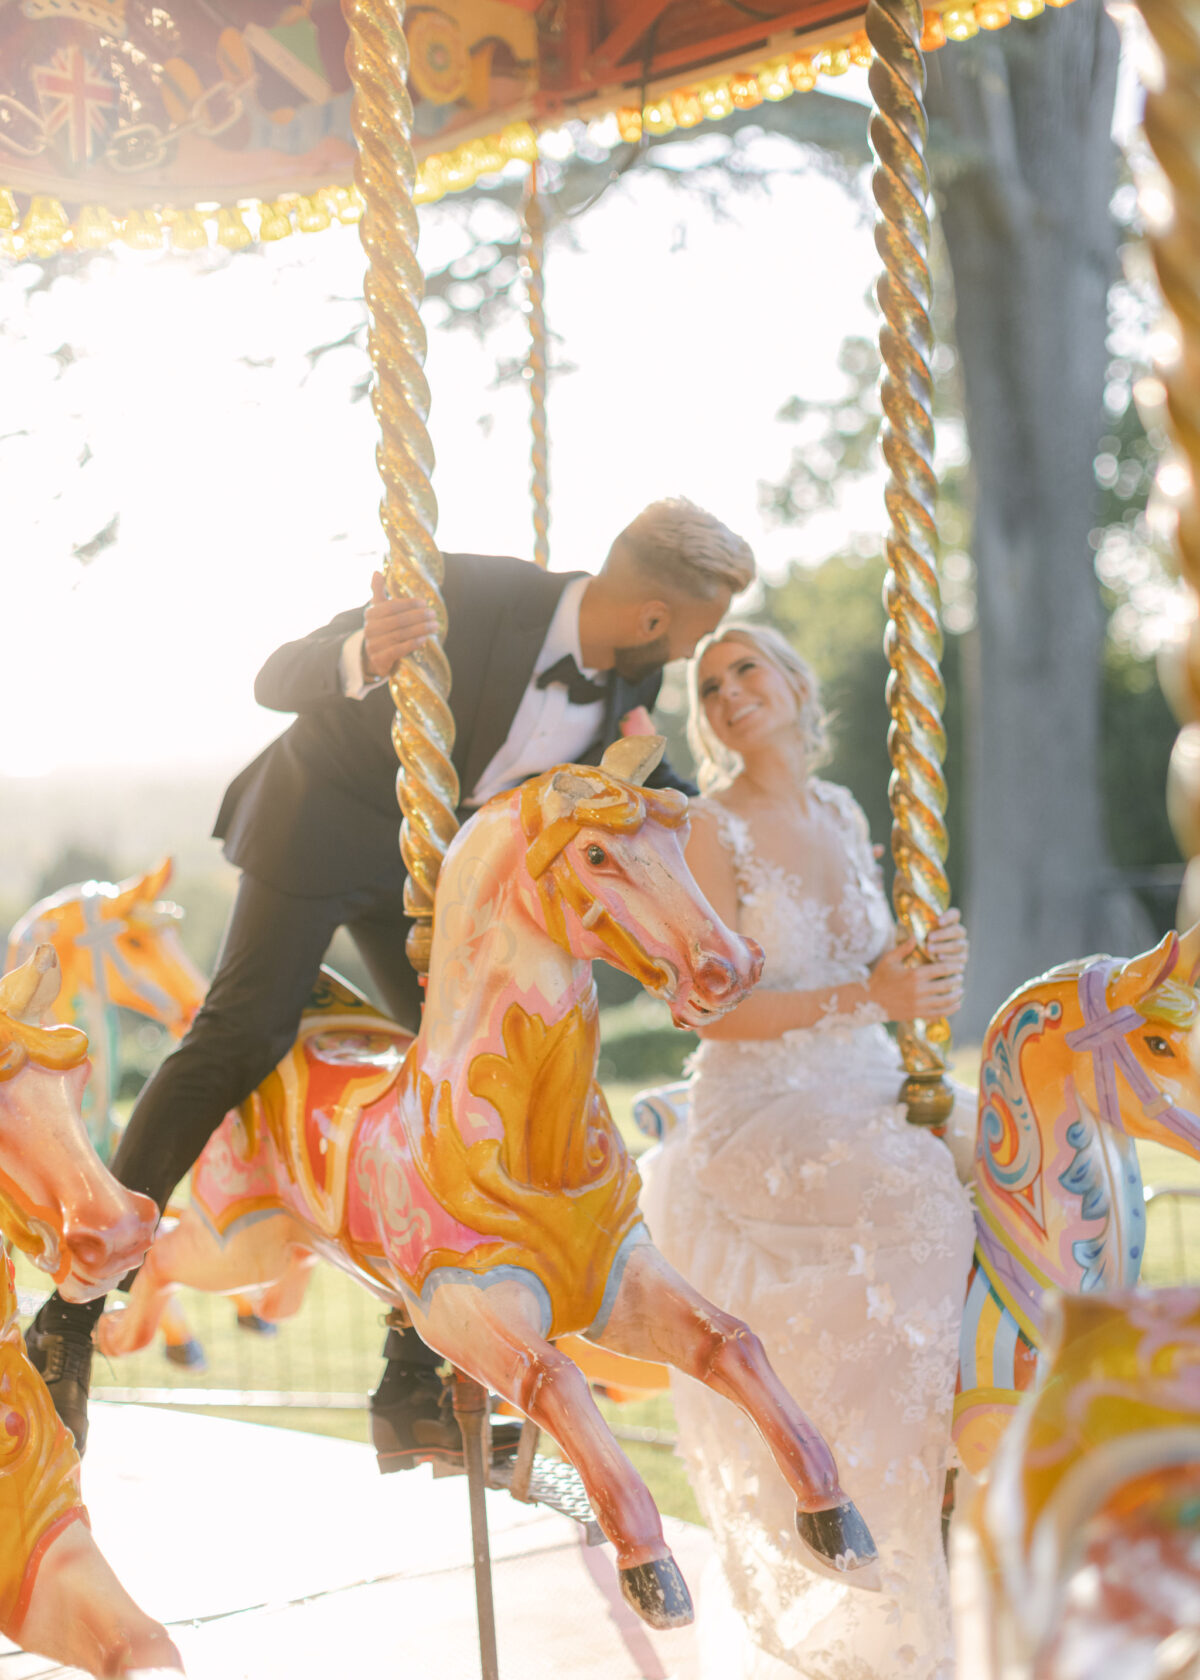 Bride and groom on carousel at wedding - Buckinghamshire wedding